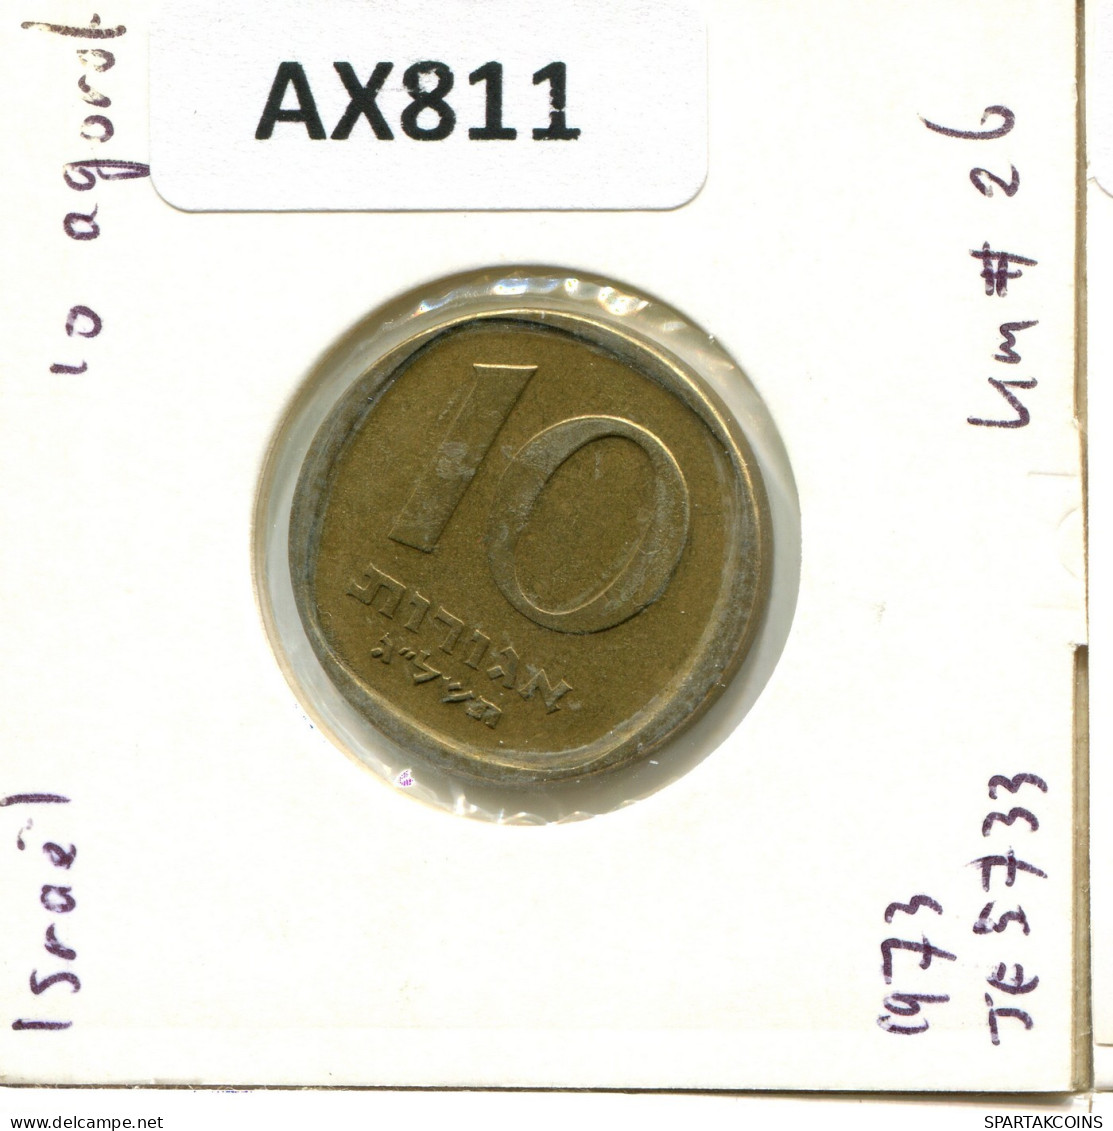 AGOROT 1973 ISRAEL Moneda #AX811.E.A - Israël